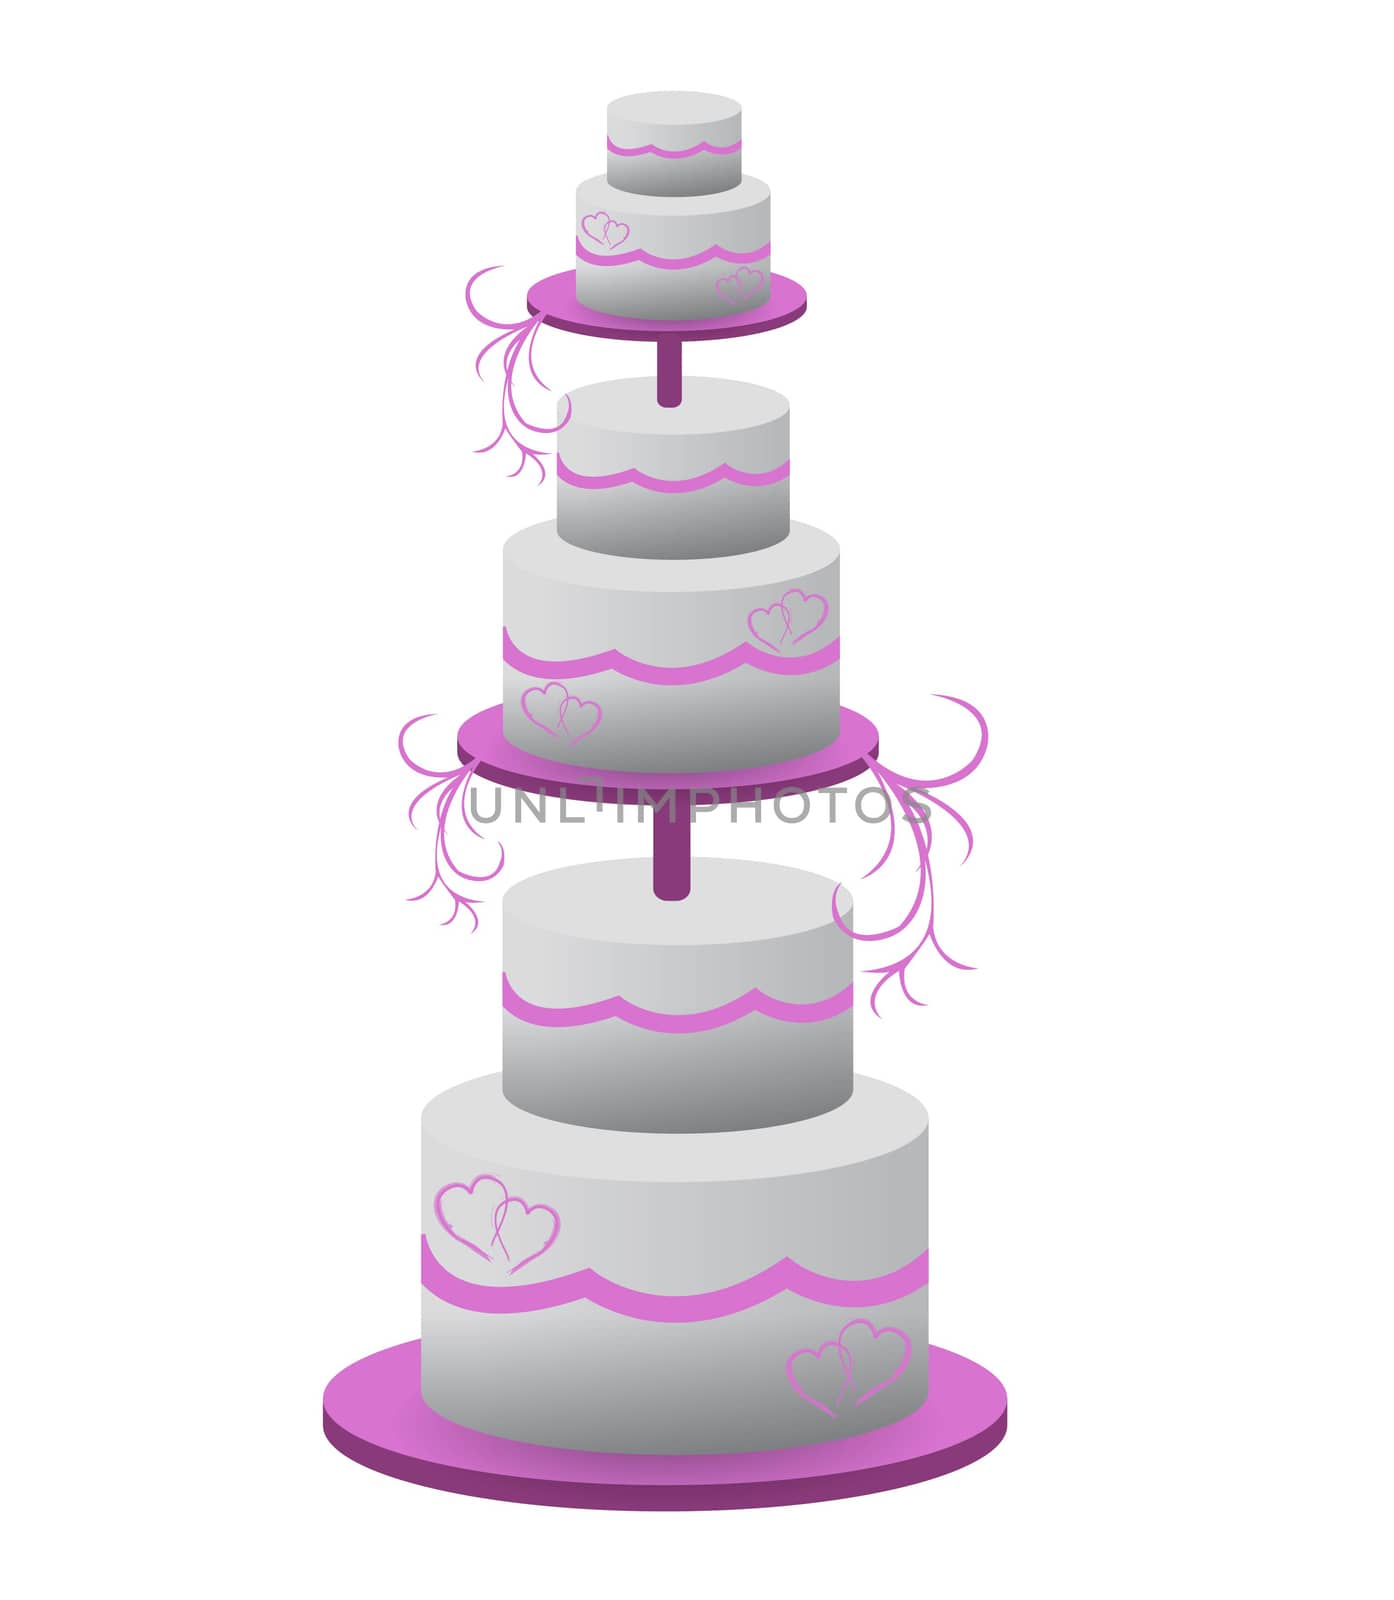 Wedding cake illustration design isolated over a white background